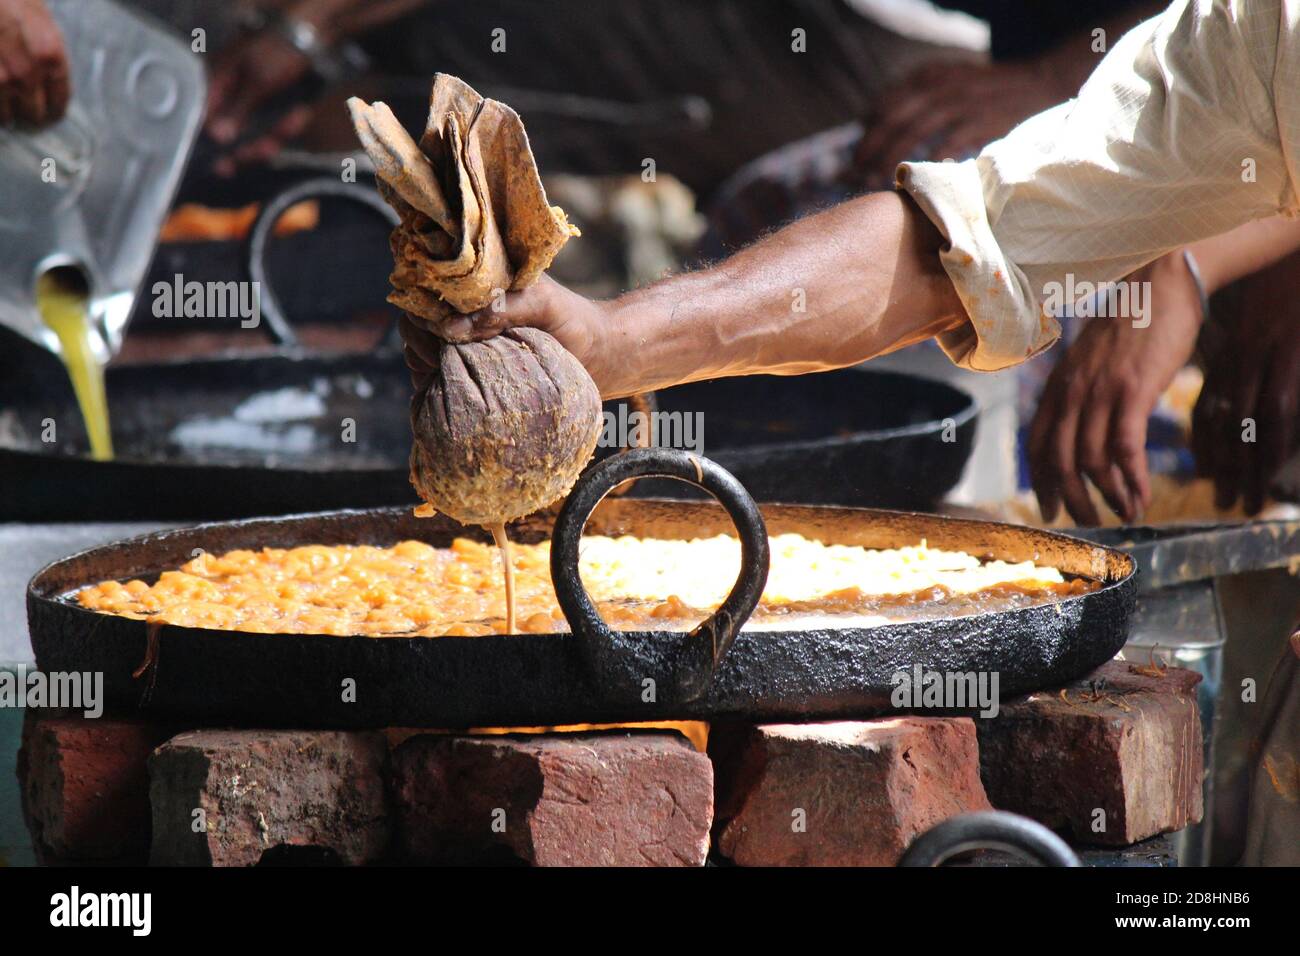 Preparing food at the Golden Temple, Amritsar, Jain. Stock Photo